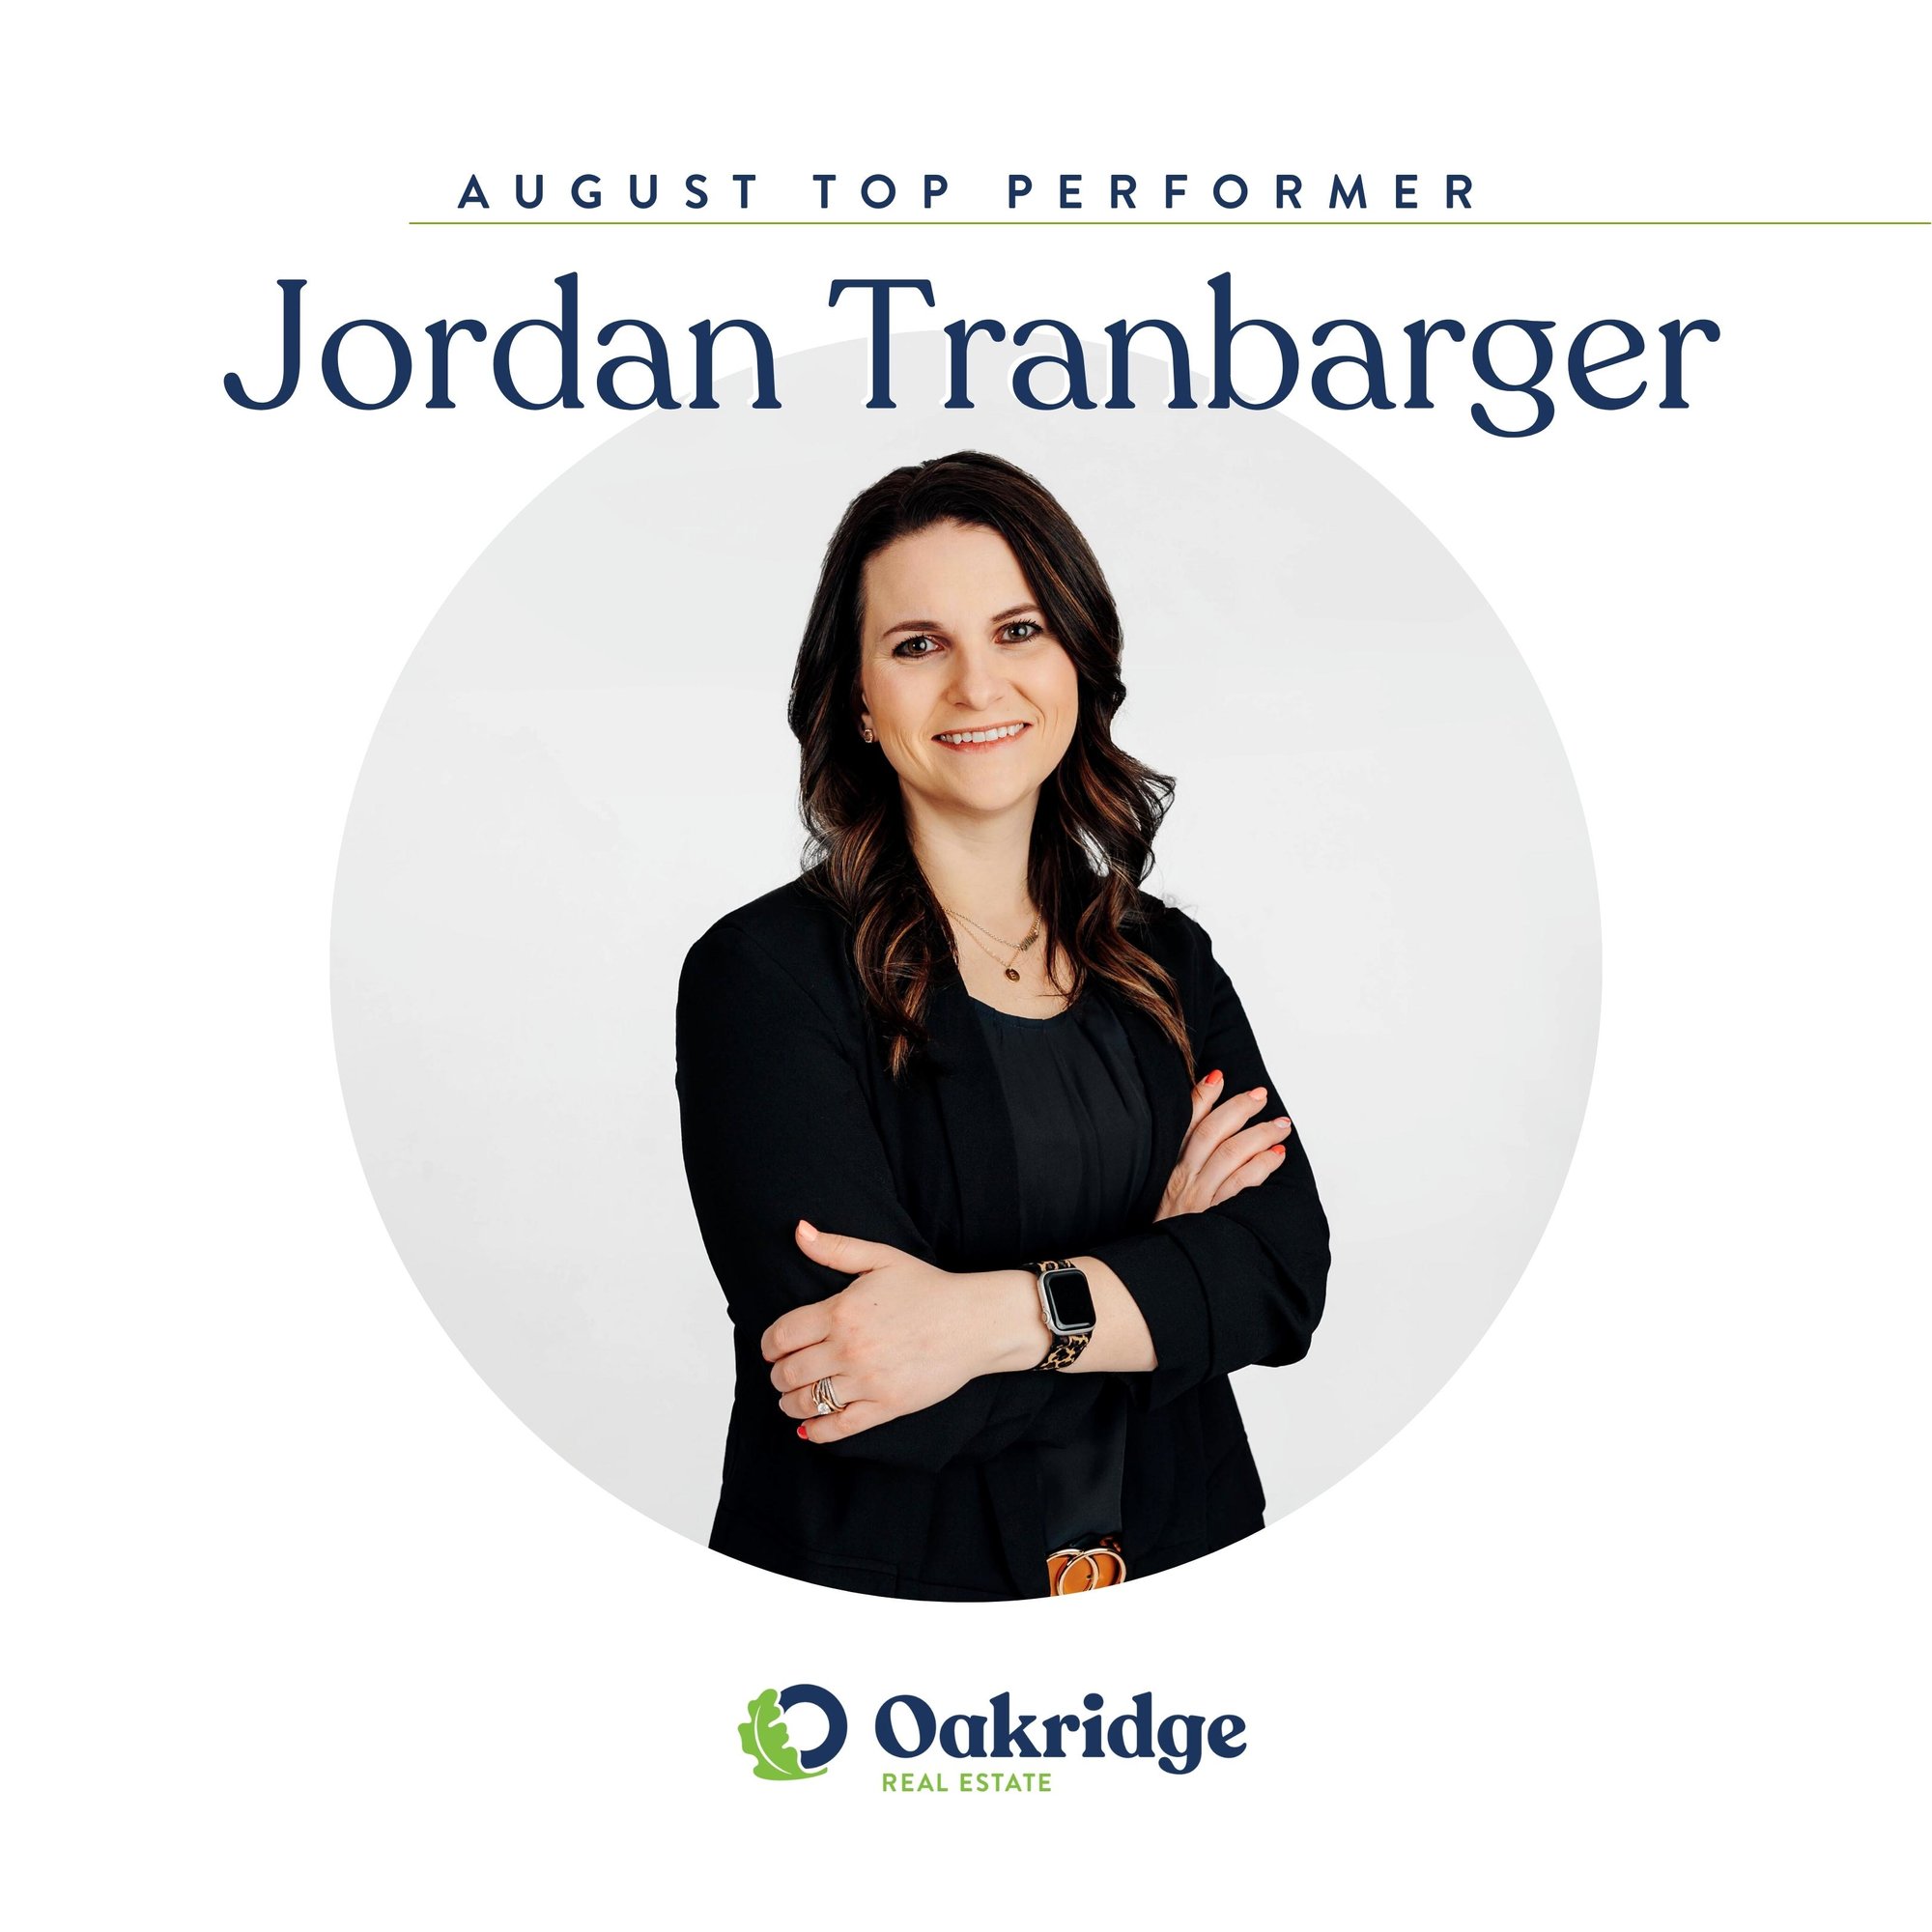 Jordan Tranbarger Oakridge Real Estate Top Performer